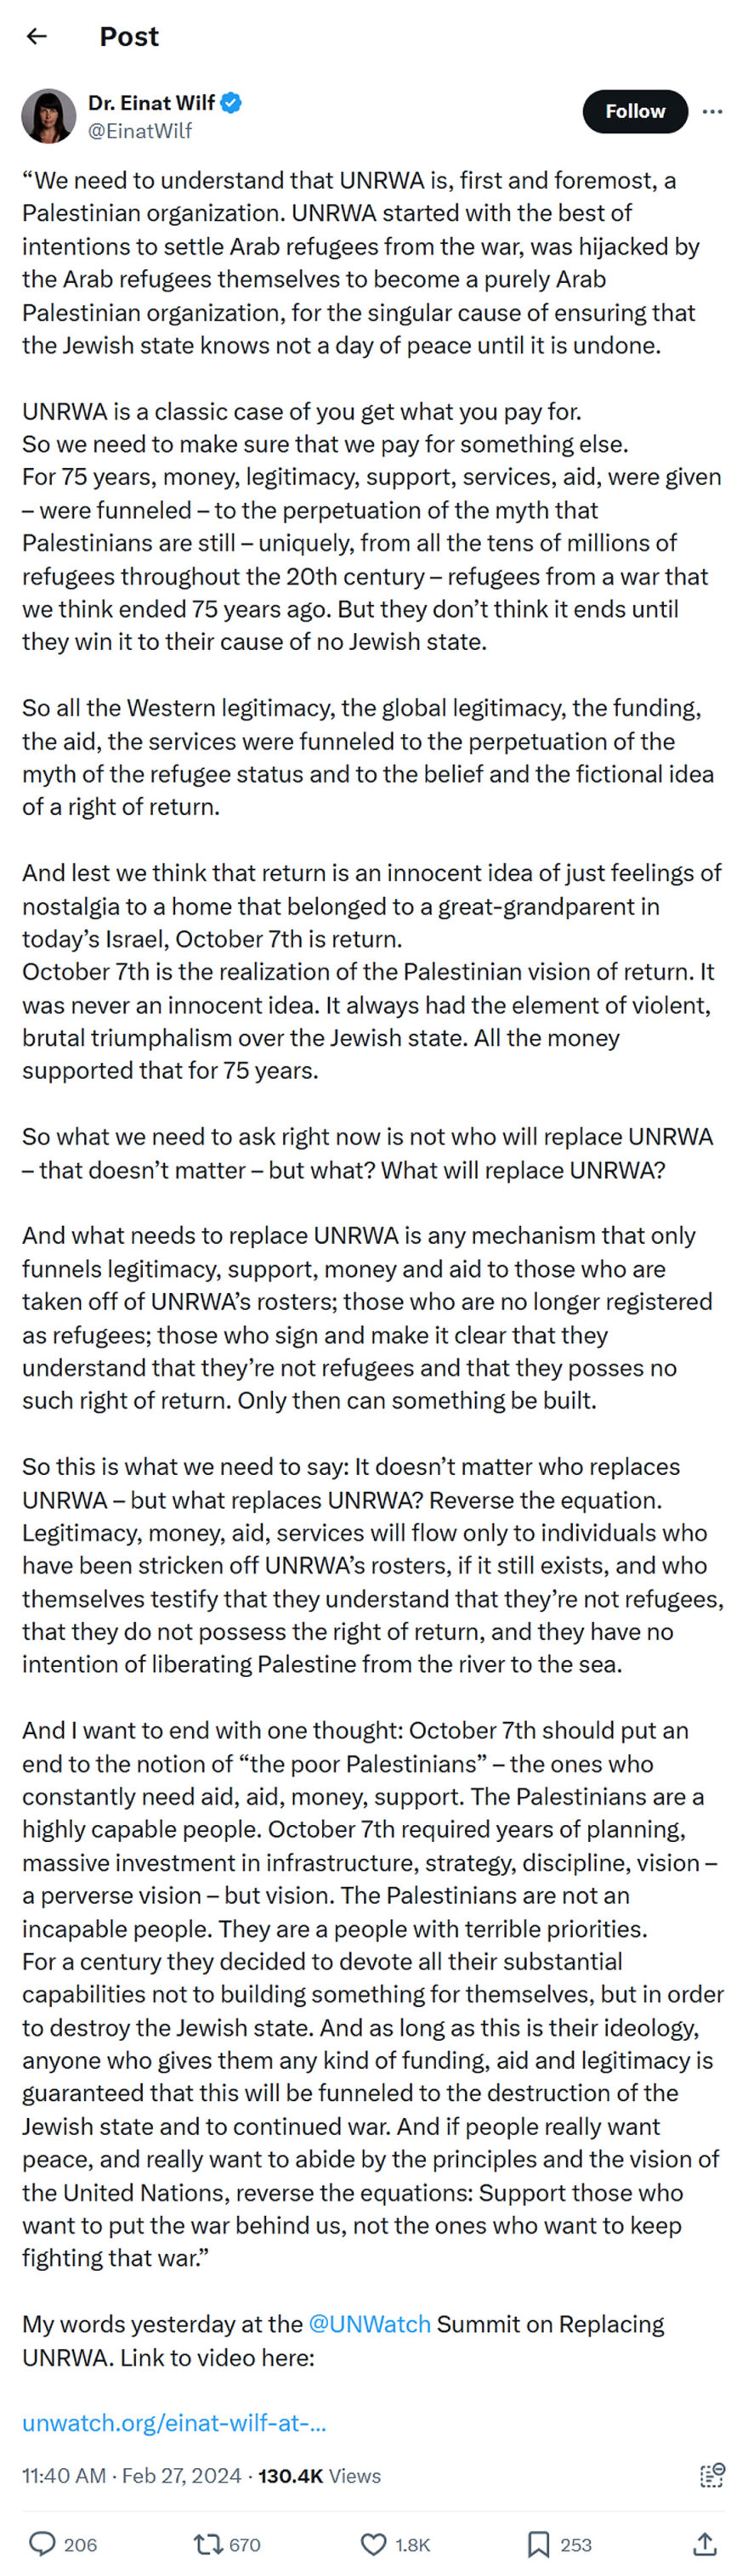 Dr. Einat Wilf-tweet-27February2024-We need to understand that UNRWA is Palestinian